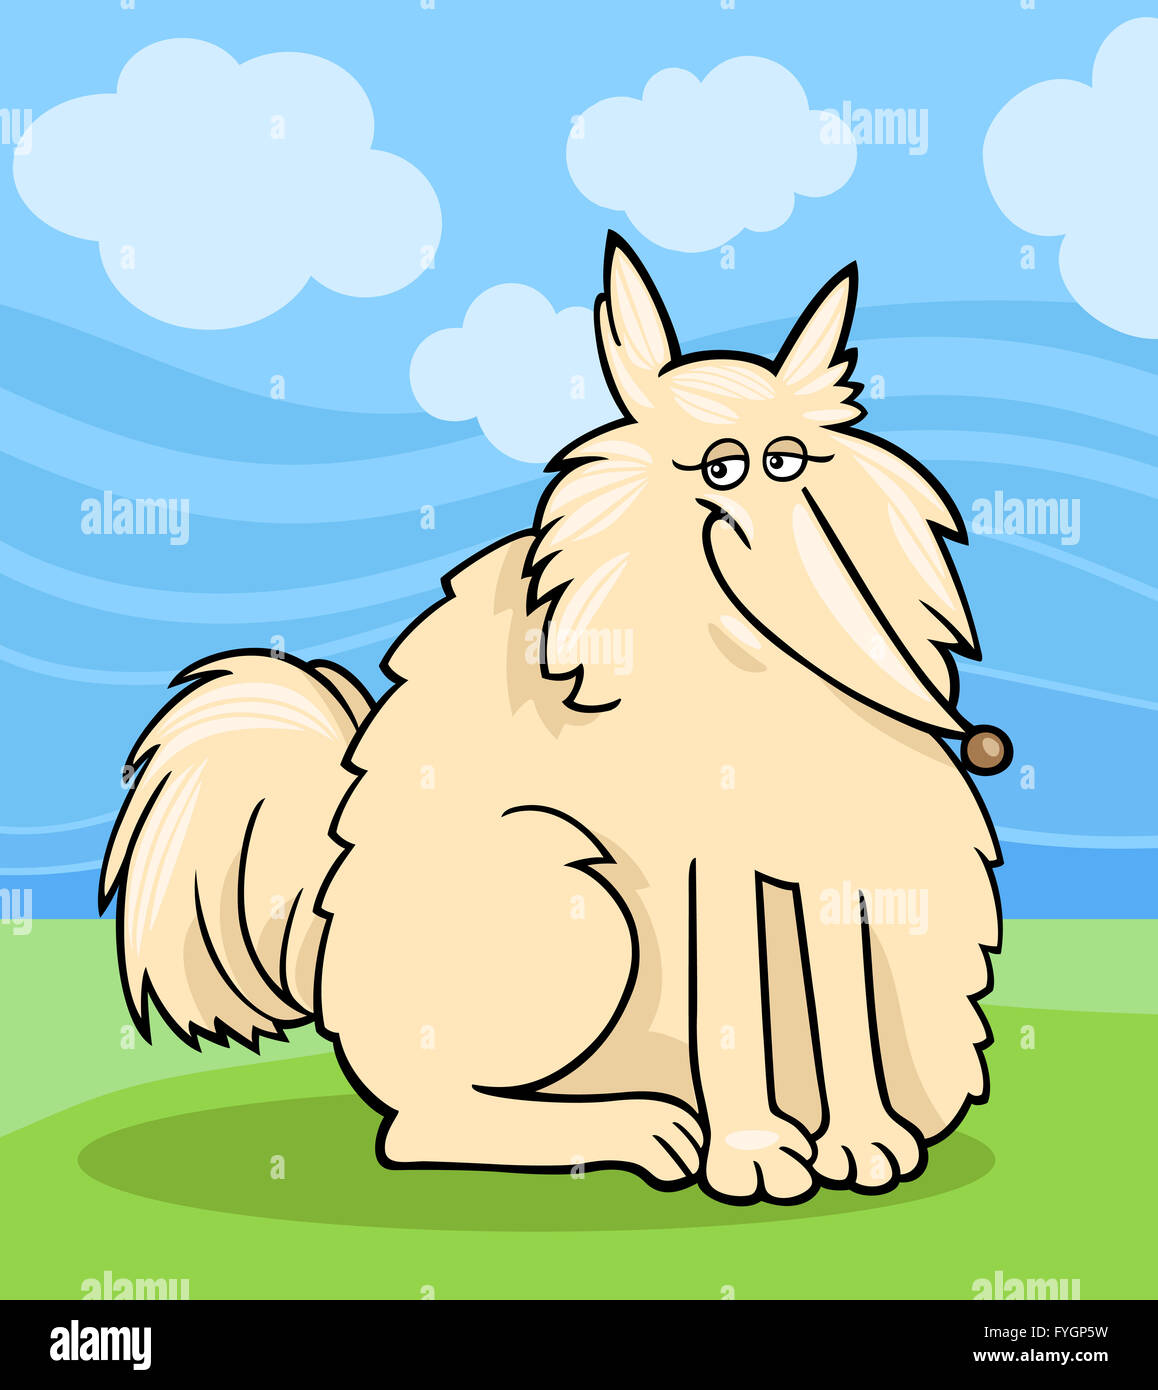 eskimo dog cartoon illustration Stock Photo